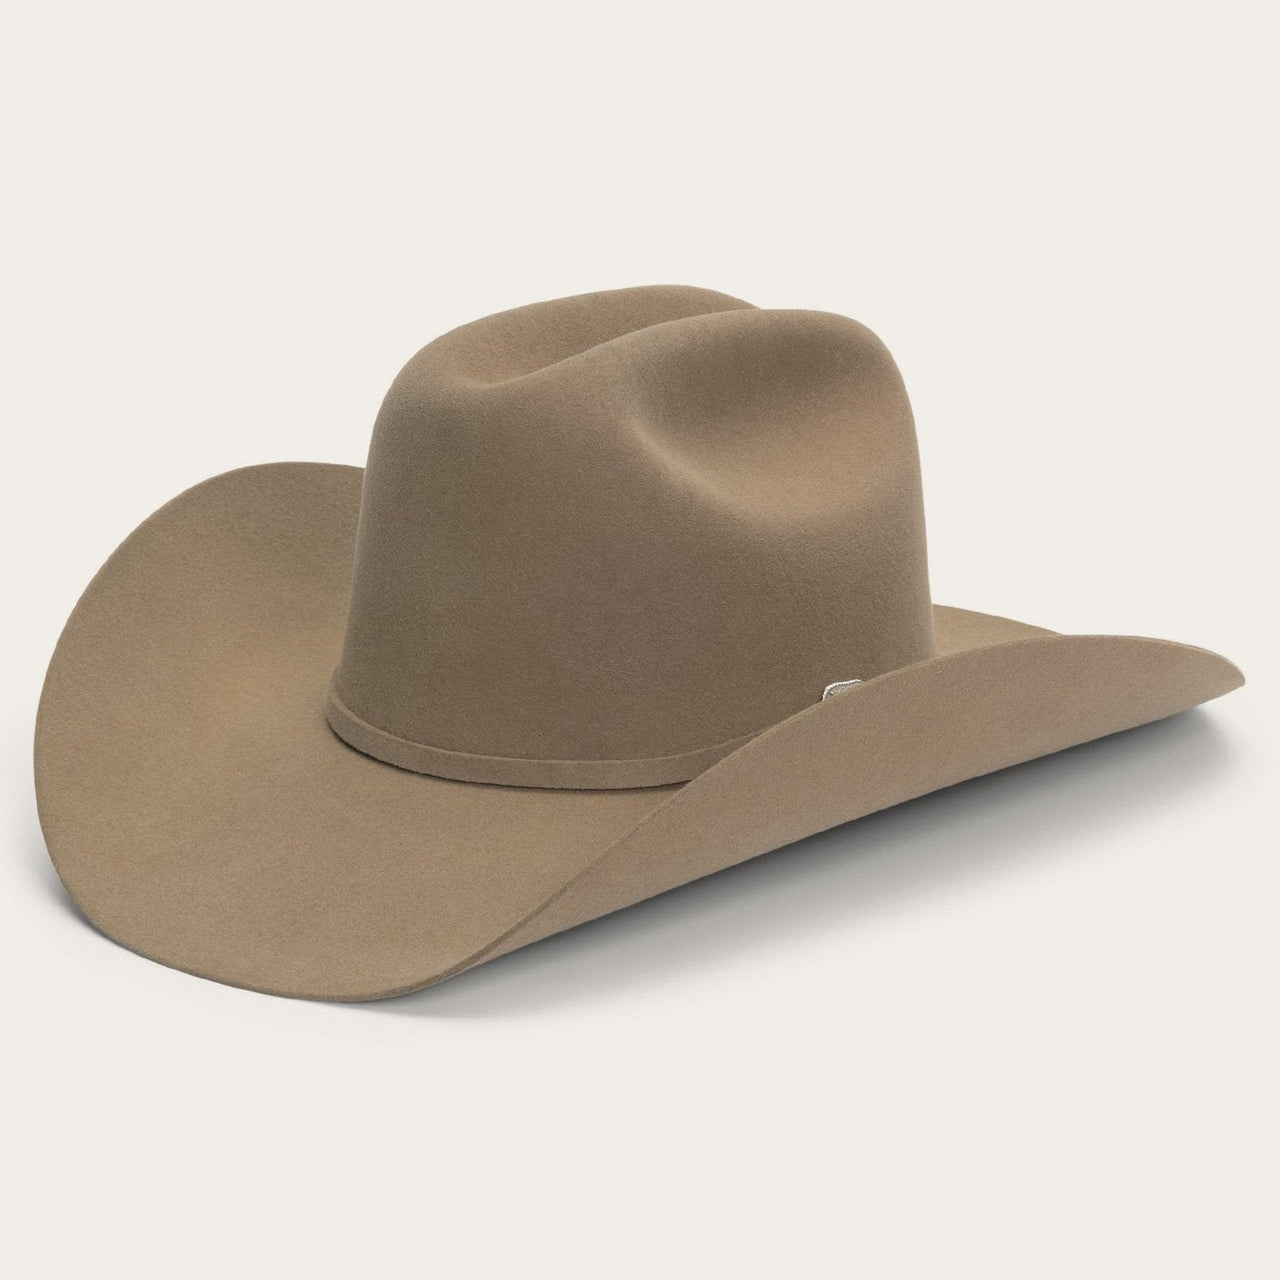 6x Stetson Skyline Fur Felt Cowboy Hat Sahara